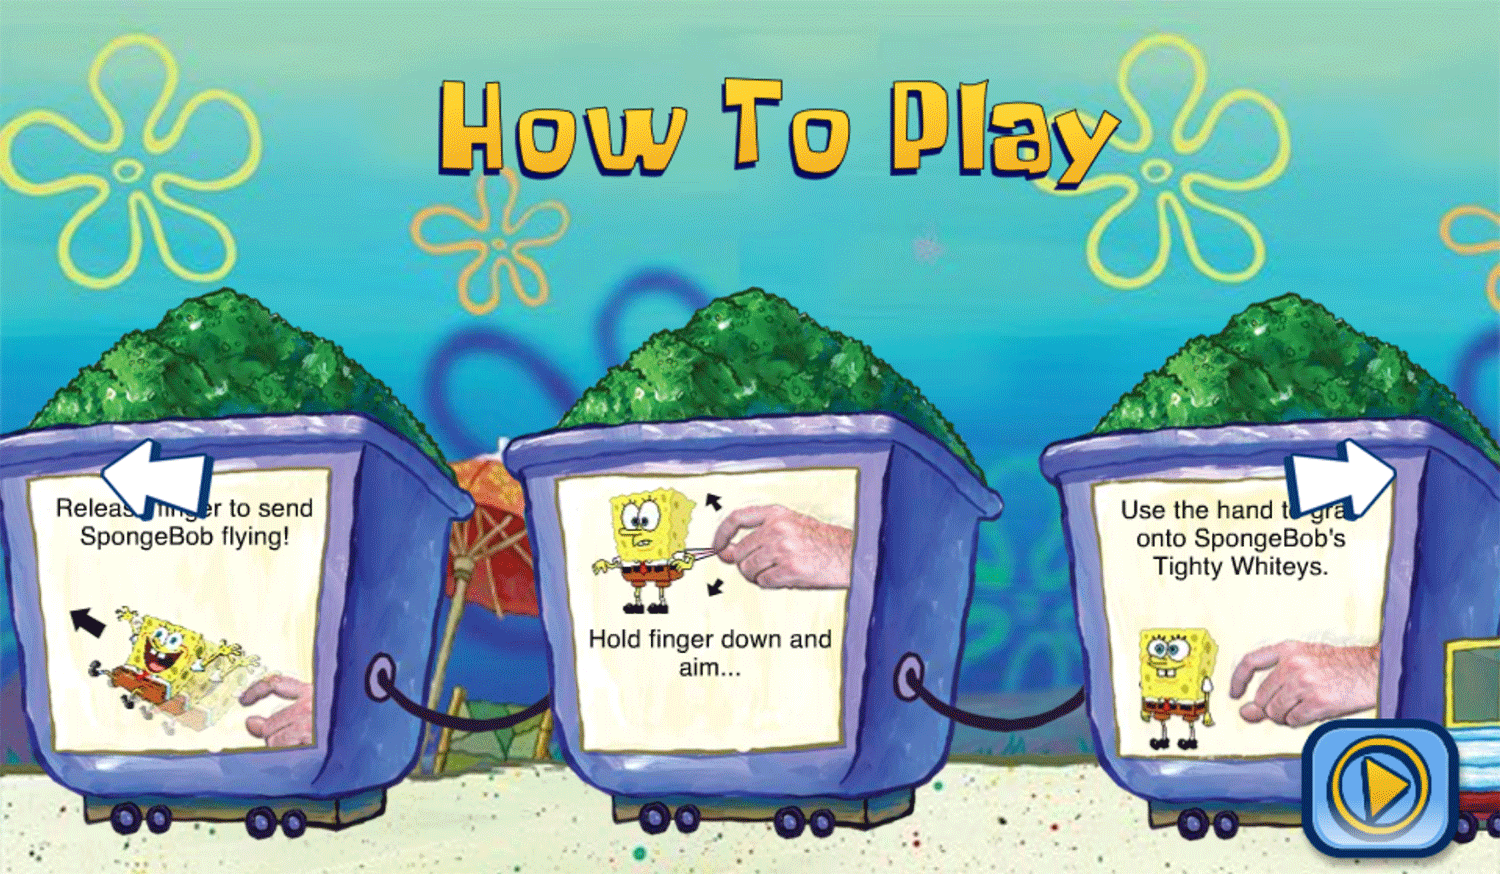 Spongebob Squarepants Tighty Whitey Tumble How To Play Screenshot.